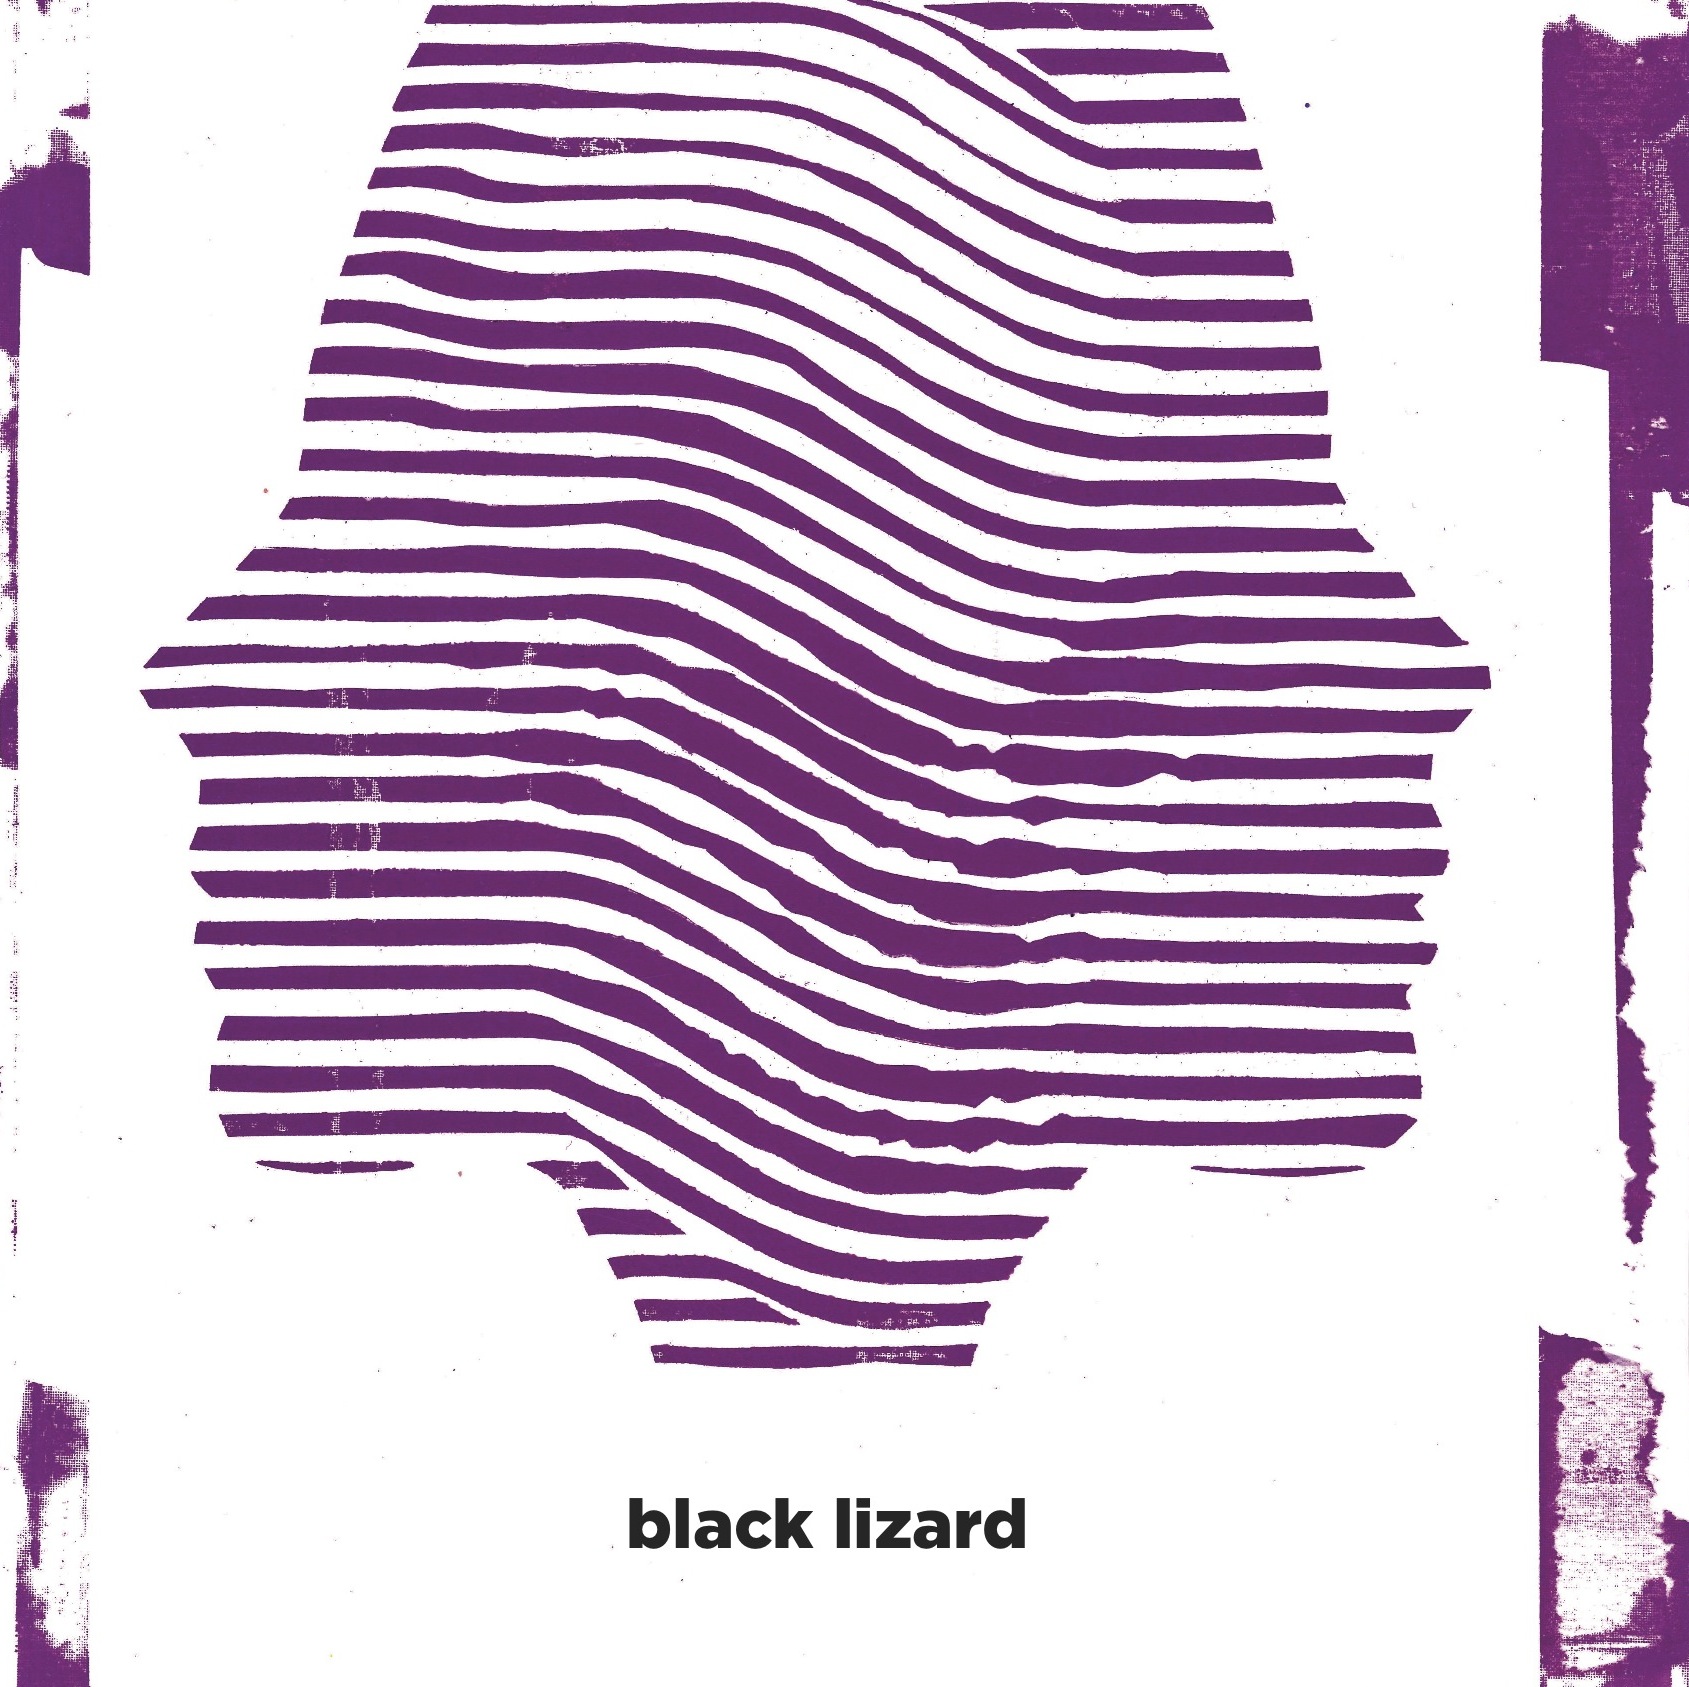 Resultado de imagem para black lizaRD black lizard soliti